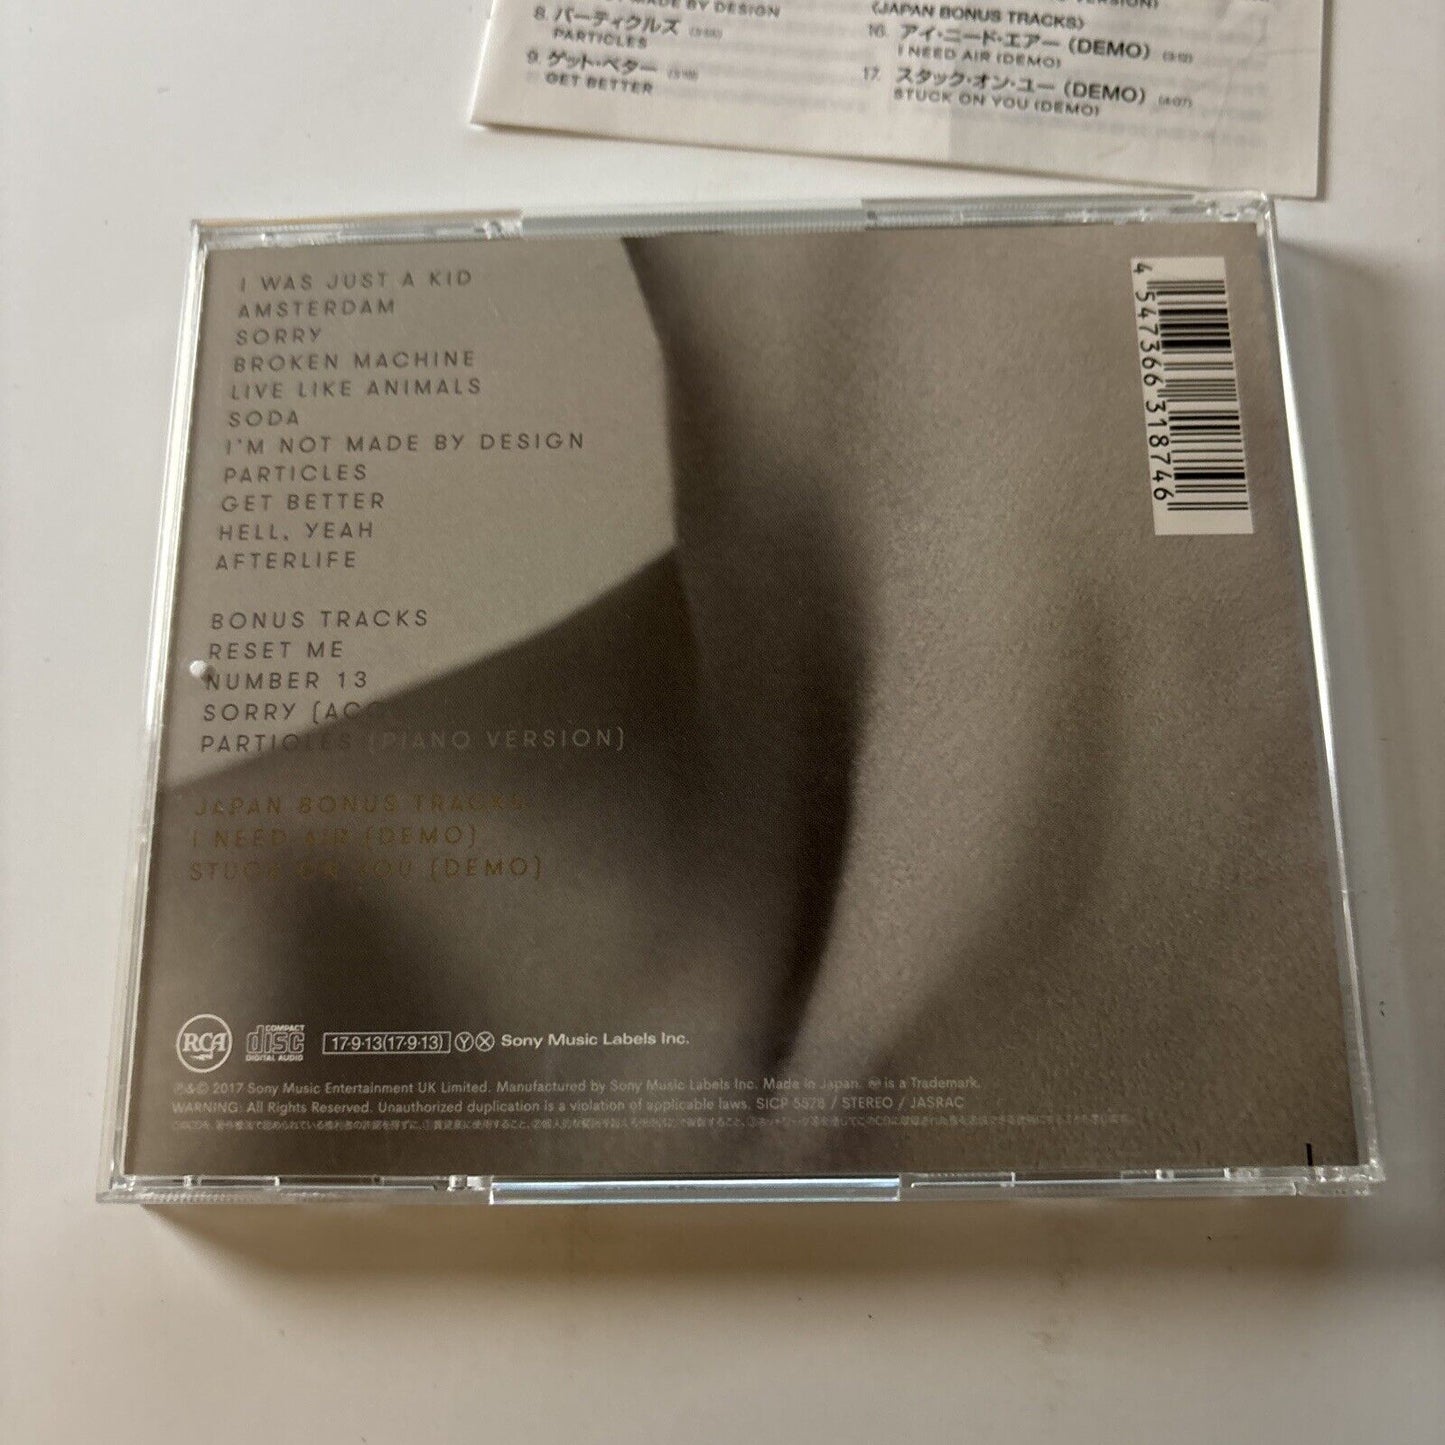 Nothing But Thieves - Broken Machine (Japan Version) (CD, 2017) Japan Sicp-5578